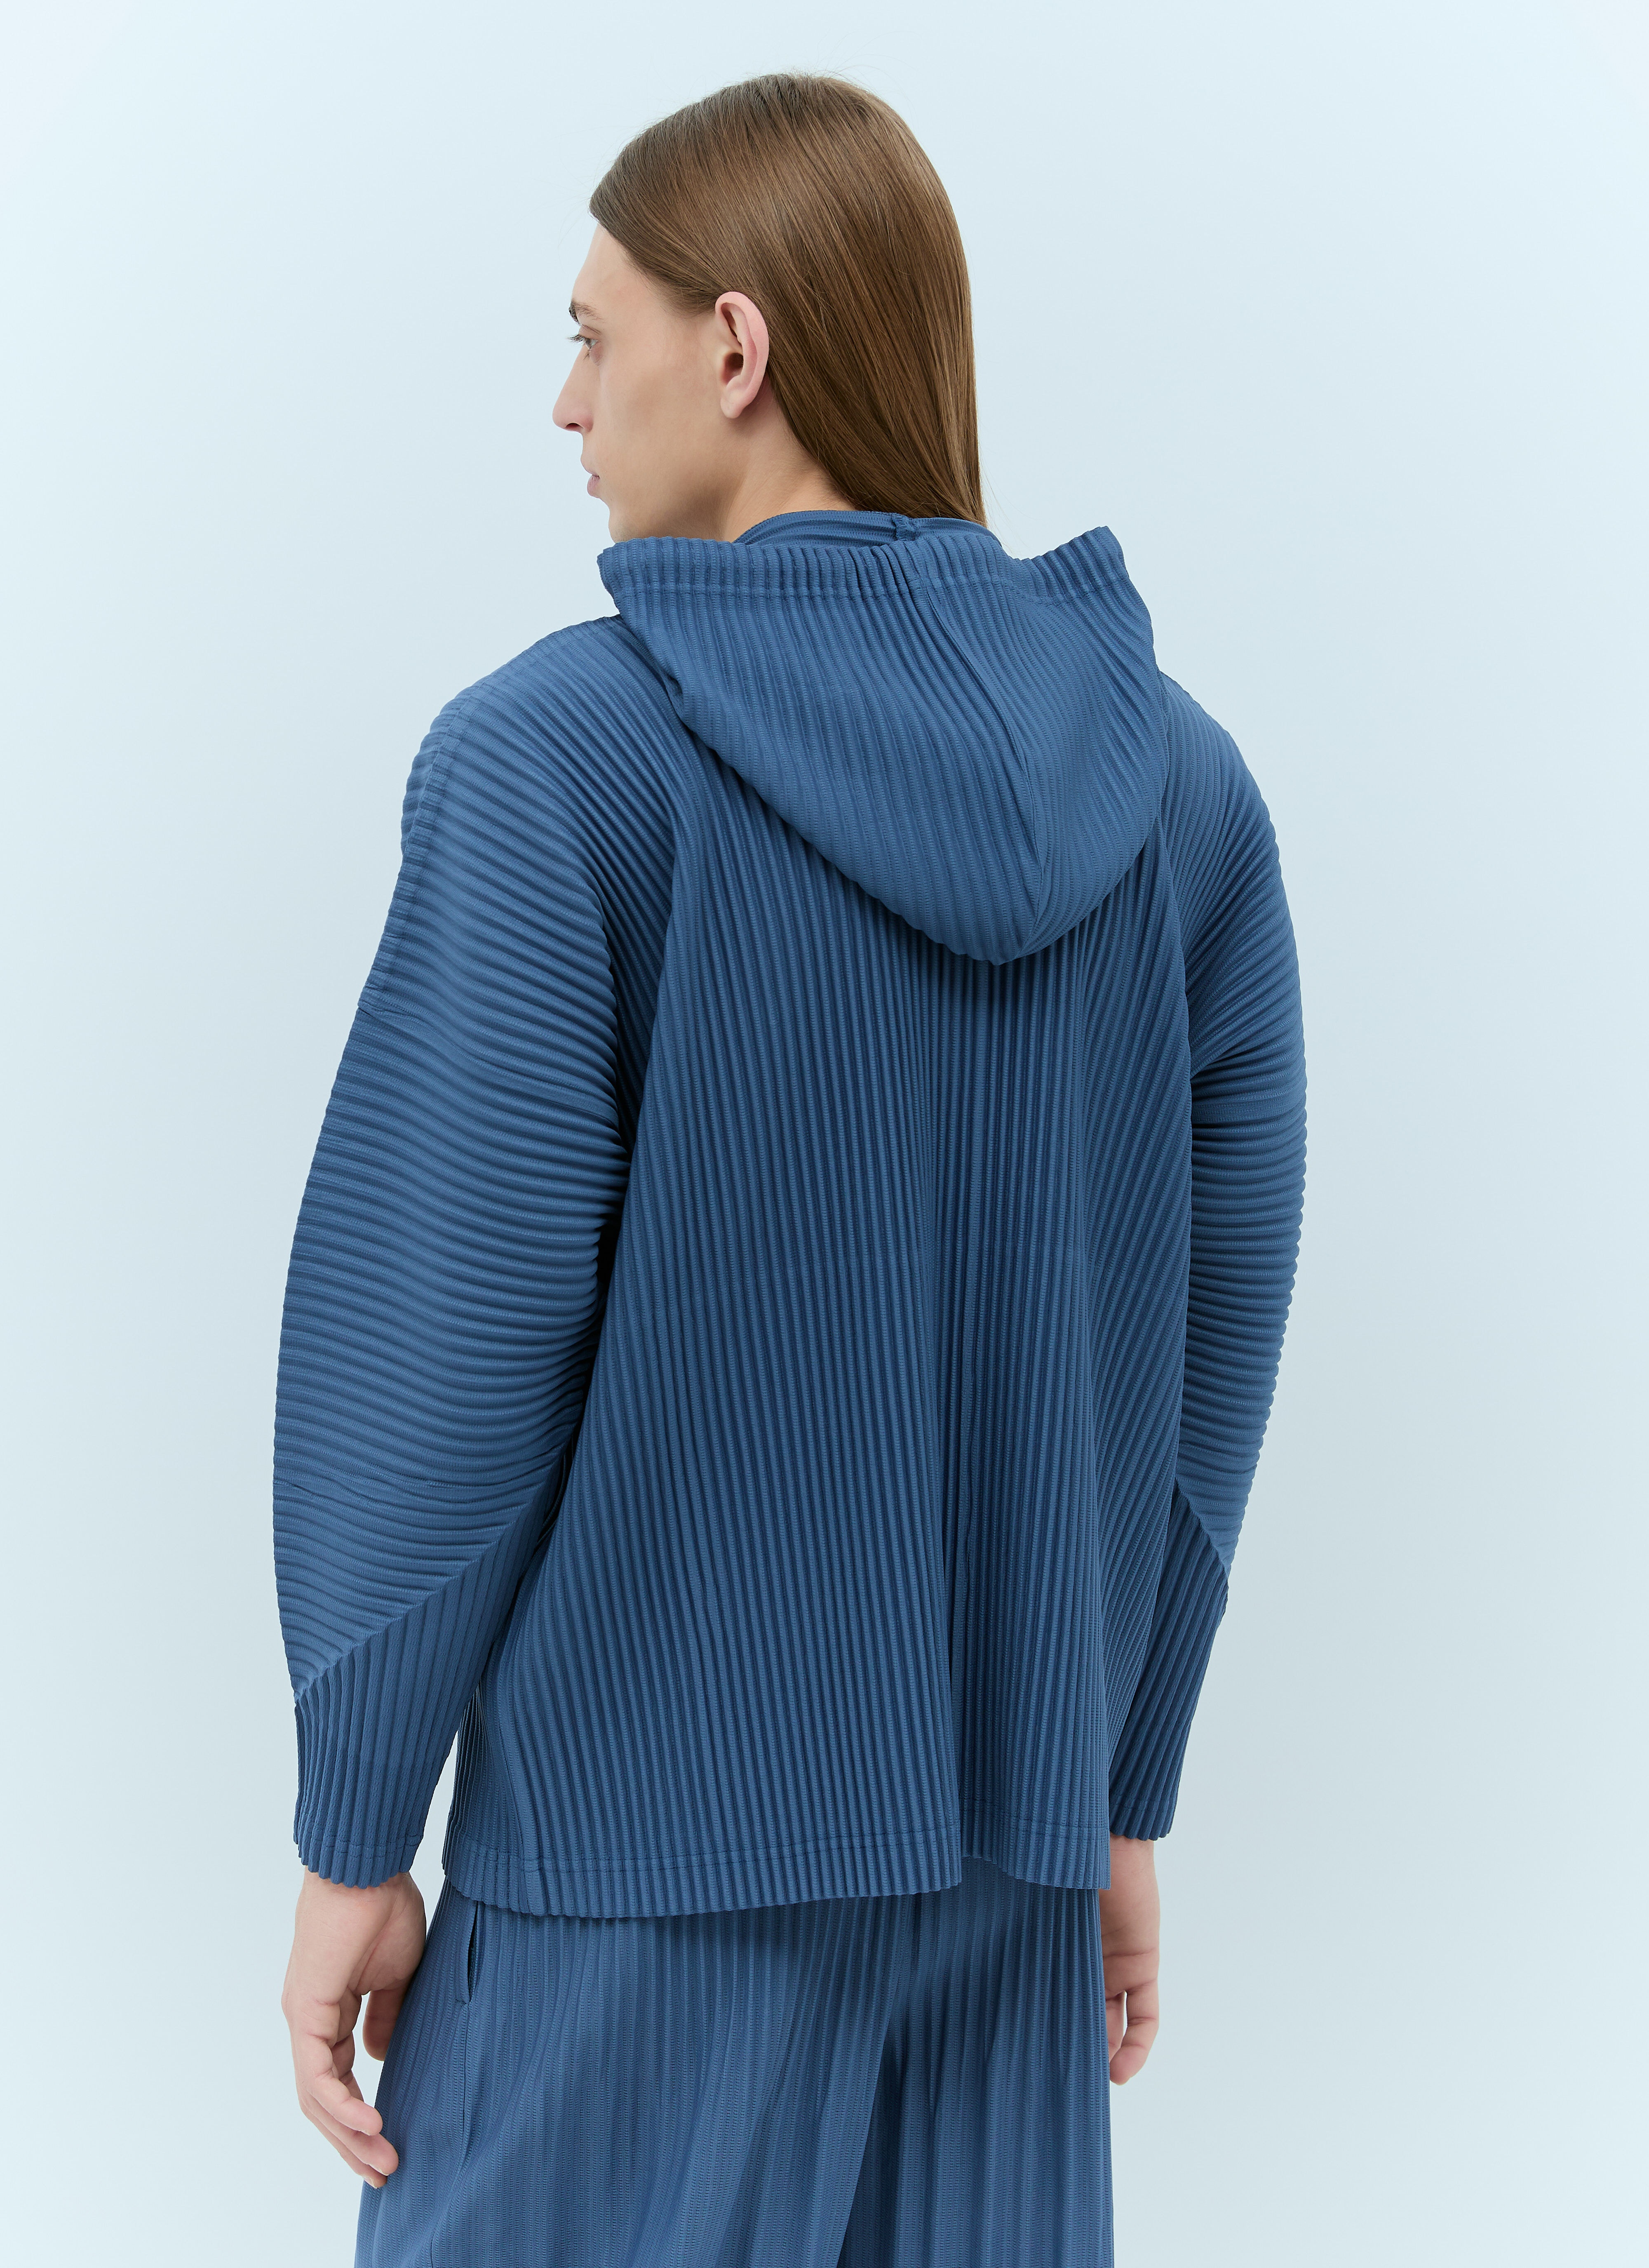 Monthly Colors: December Hooded Sweatshirt - 4